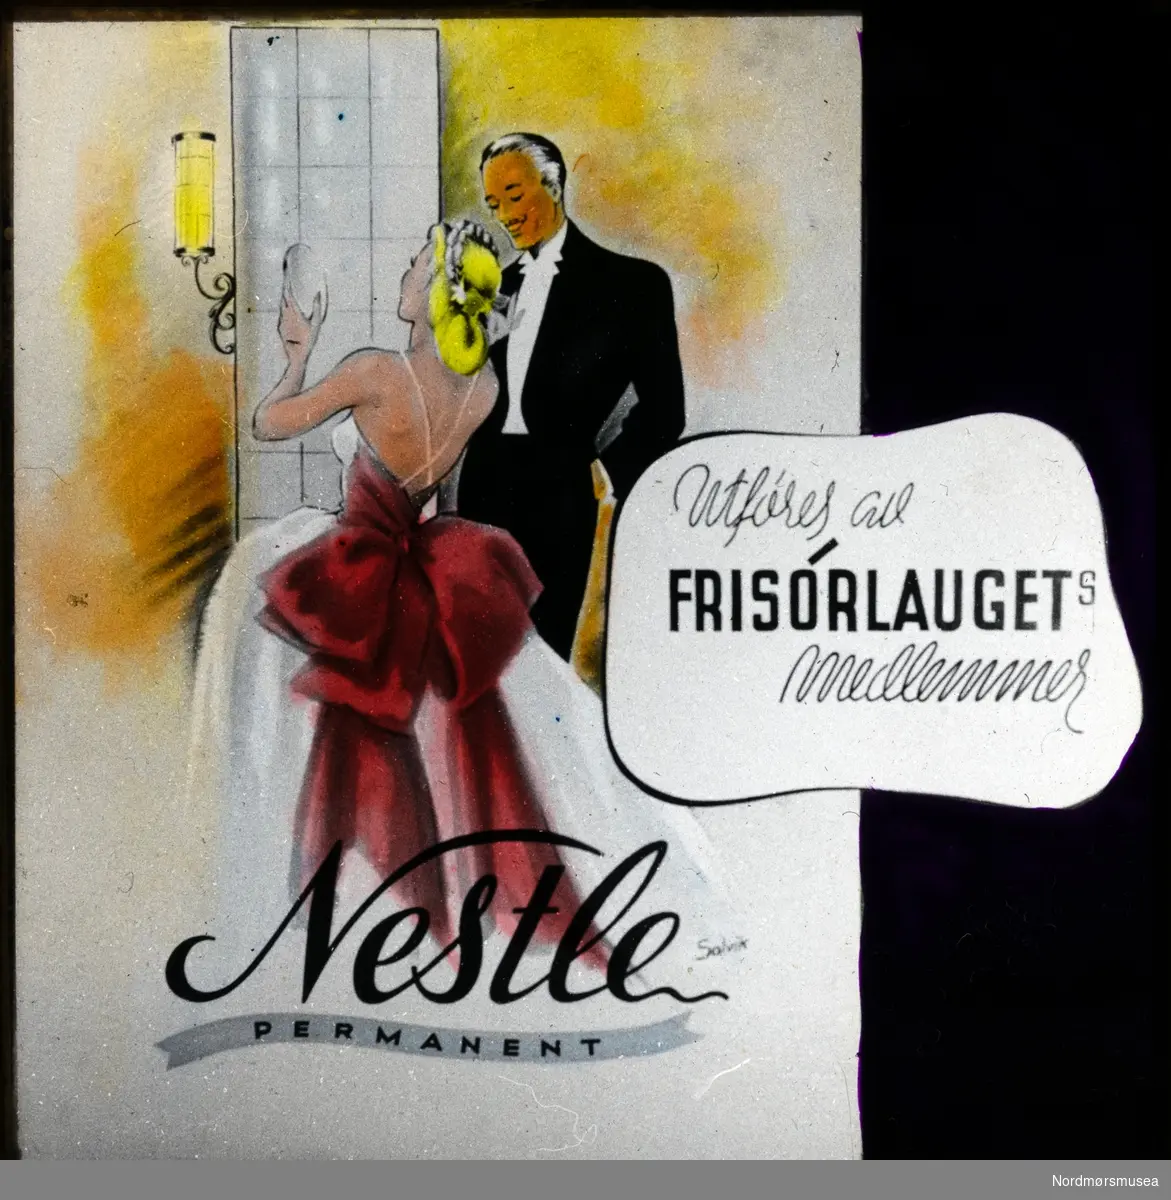 Nestle permanent, Frisørlauget. Kinoreklame fra Kristiansund, hovedsaklig fra perioden 1950 til 1980.